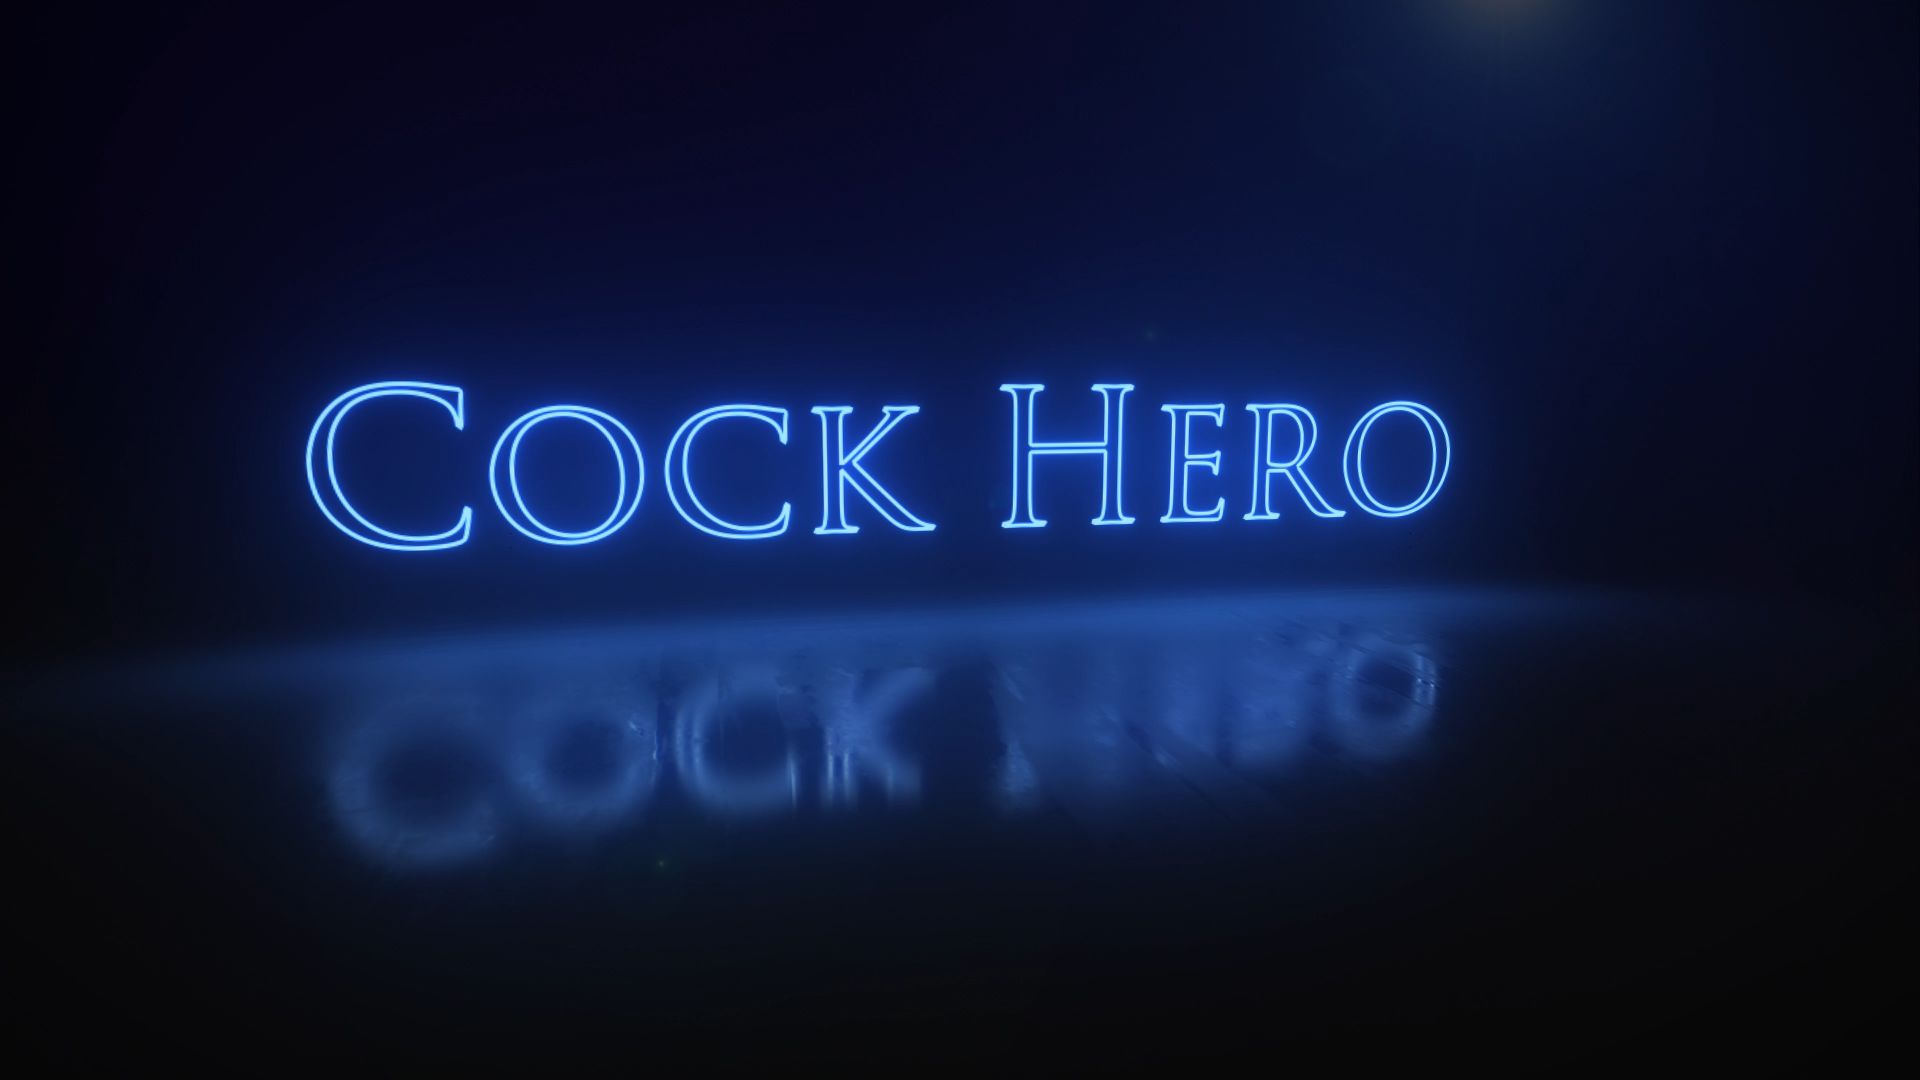 Cock hero basic